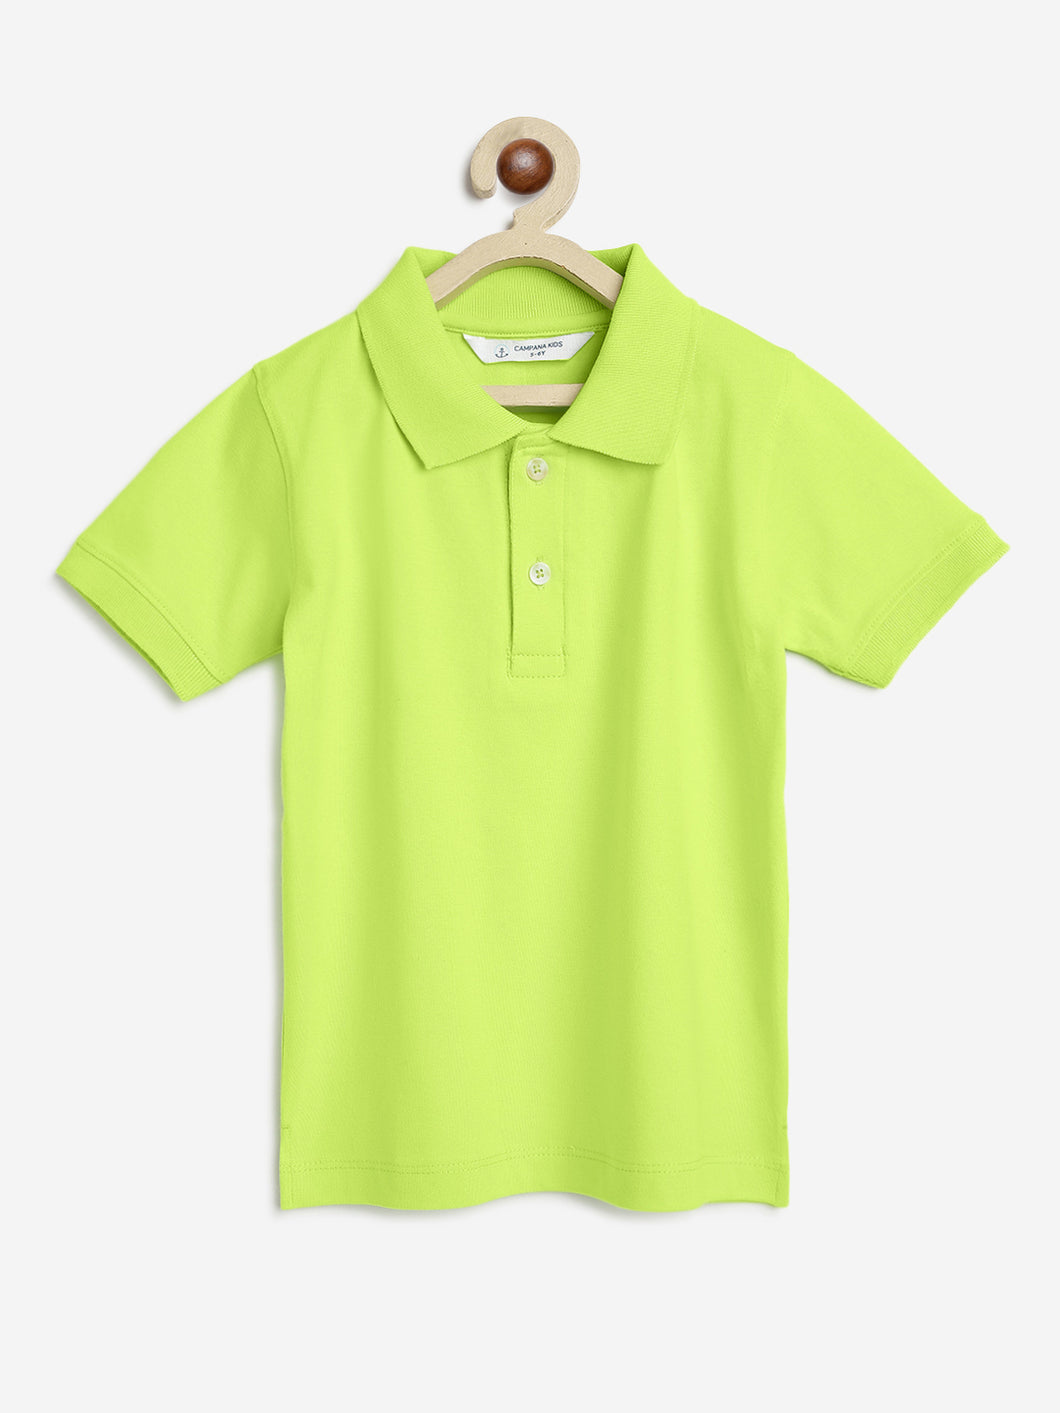 Campana Boys Niko 100% Cotton Jersey Half Sleeves Solid Polo T-Shirt - Lime Green